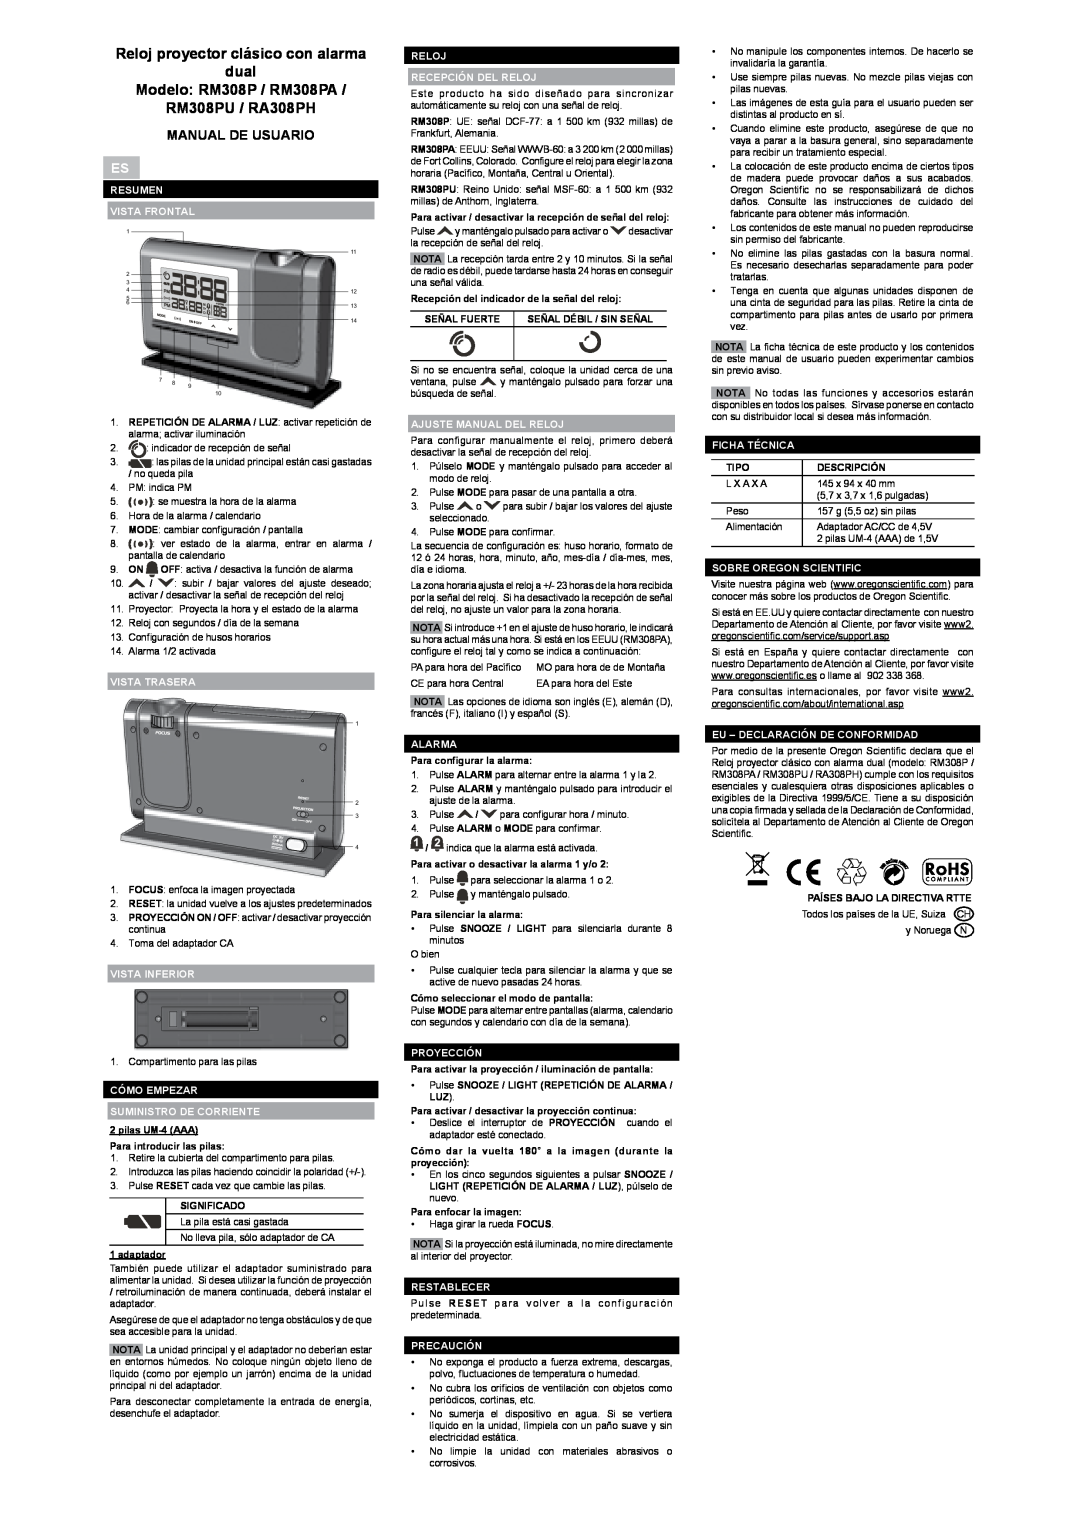 Oregon Scientific RA308PH, RM308PU Reloj proyector clásico con alarma dual Modelo RM308P / RM308PA, Manual De Usuario 